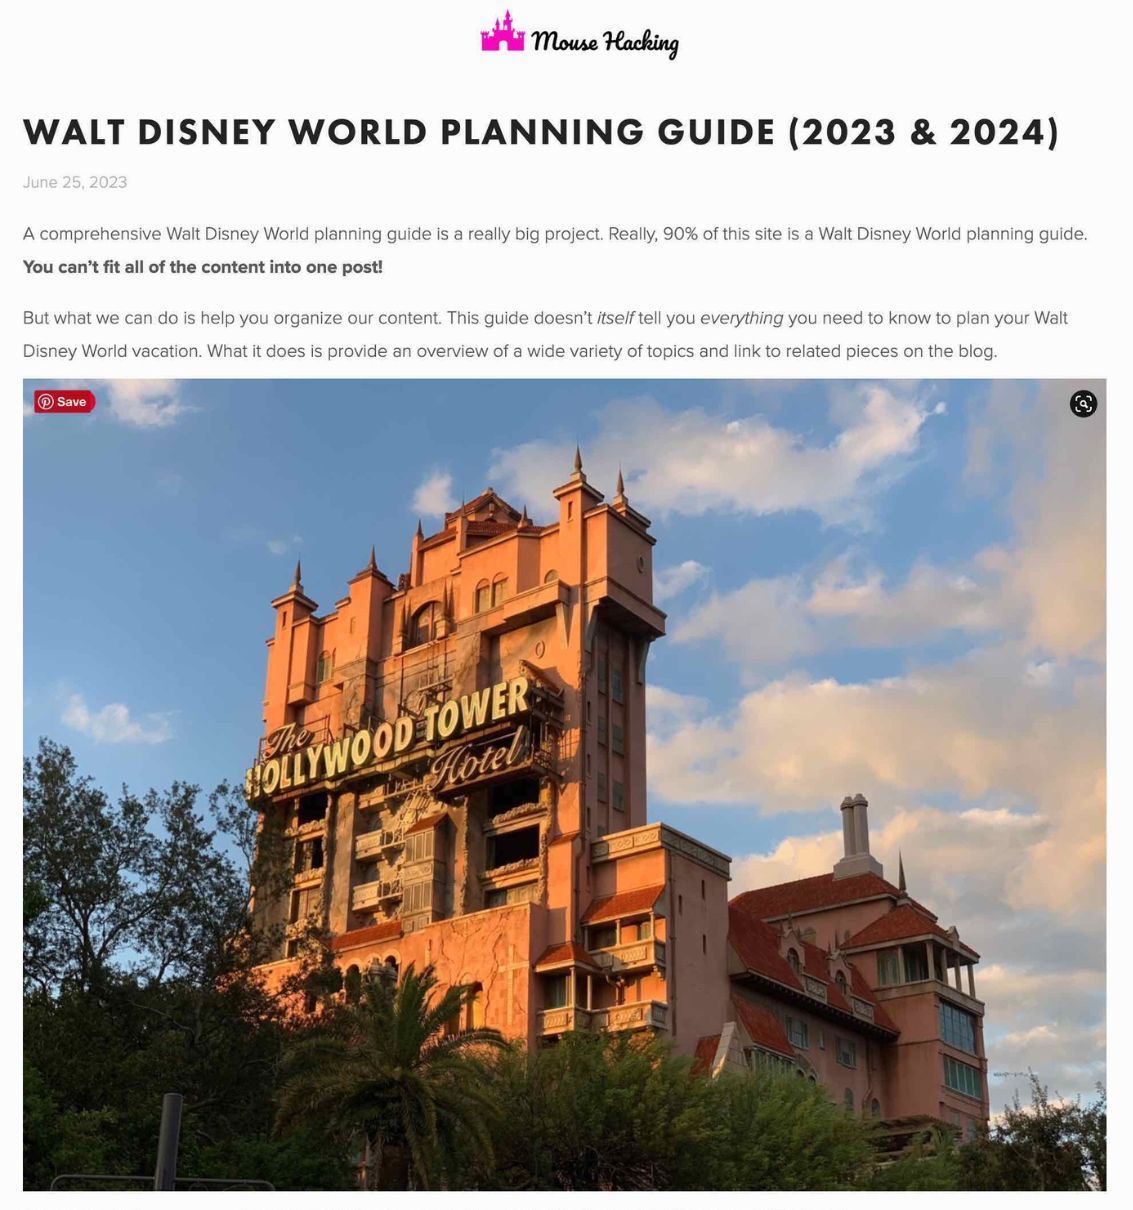  "Walt Disney World Planning Guide (2023 & 2024)"